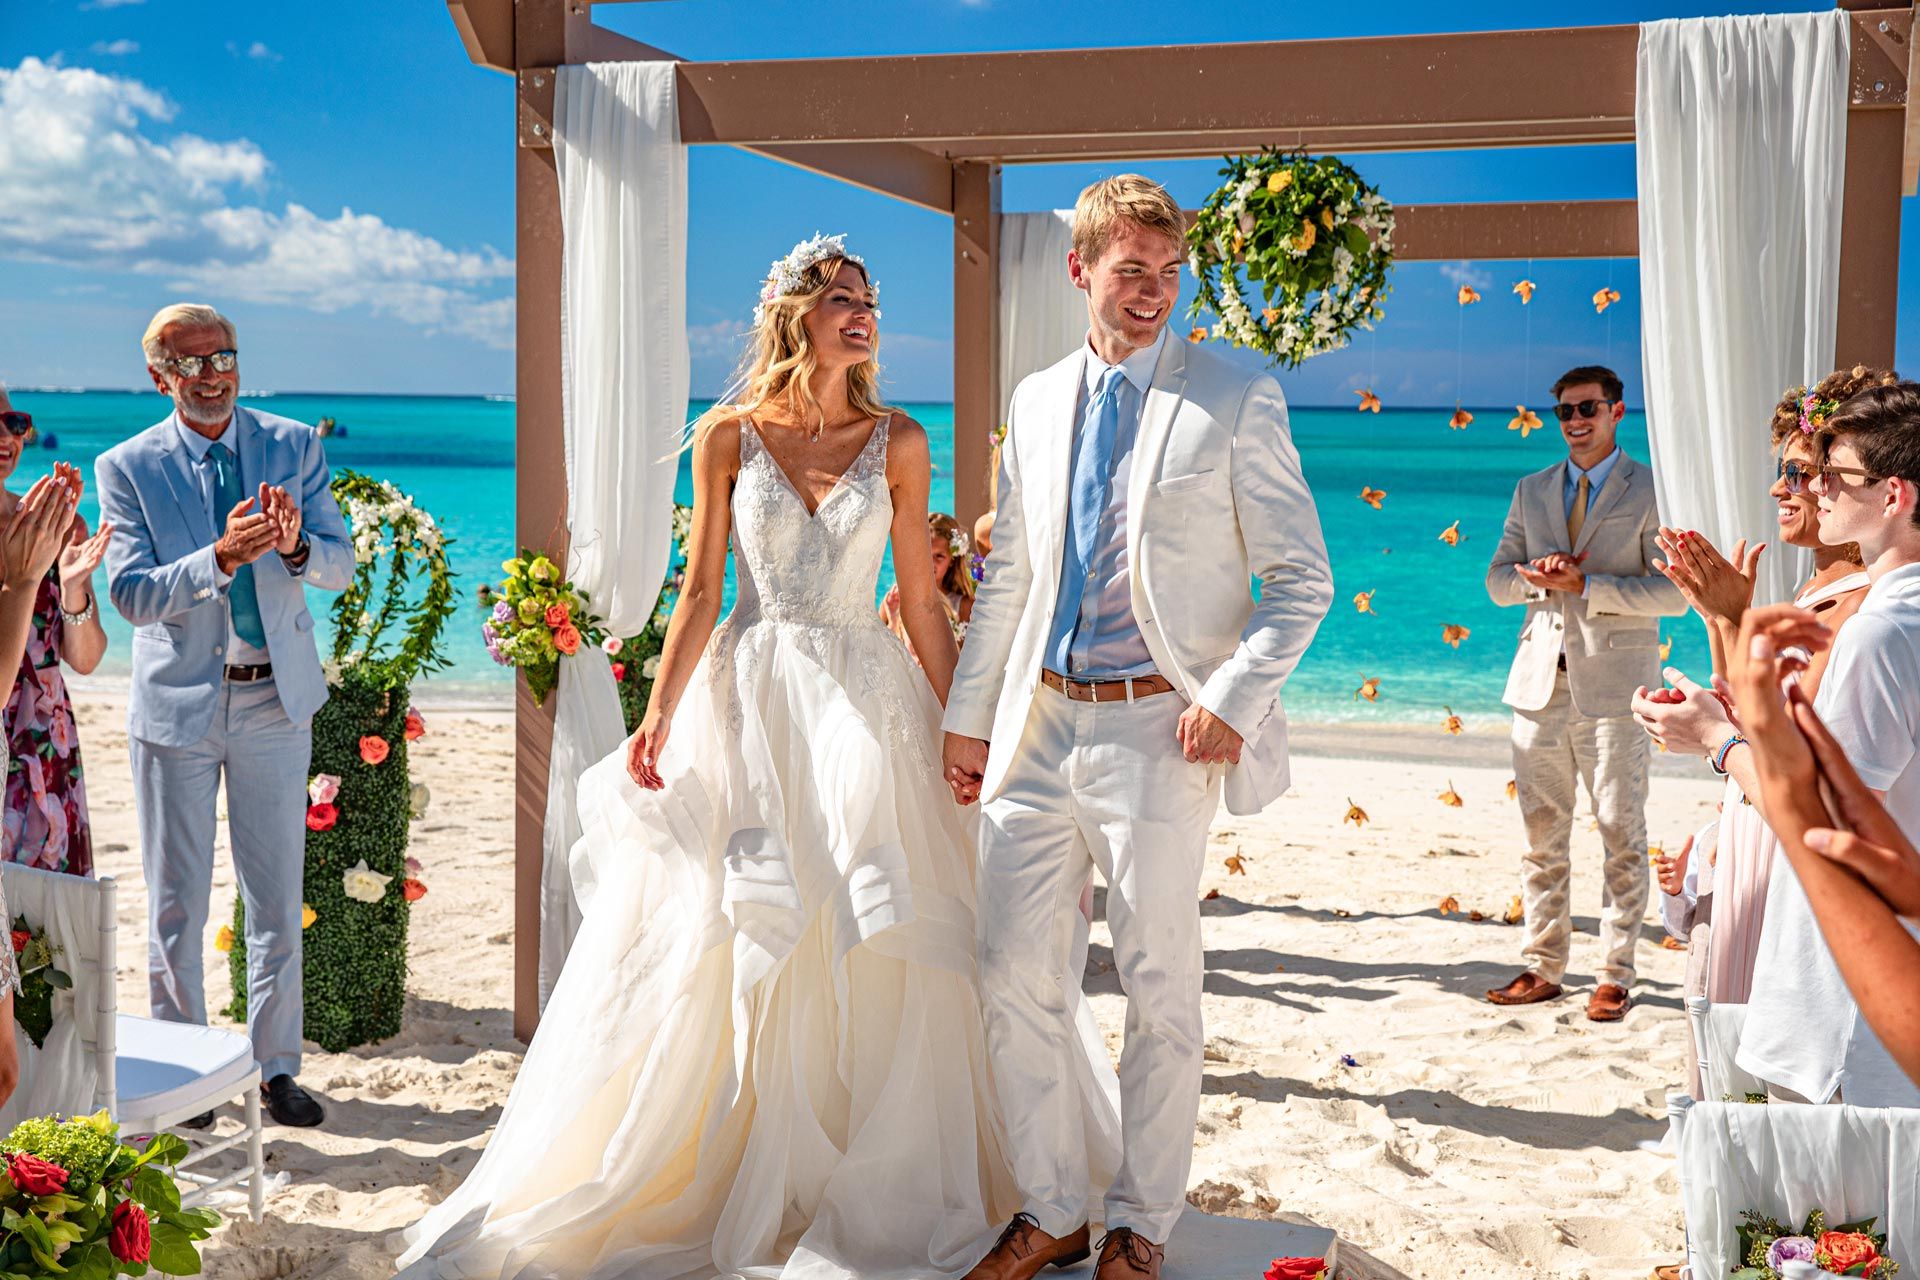 Beaches-Turks-and-Caicos-Beach-Wedding-1-1